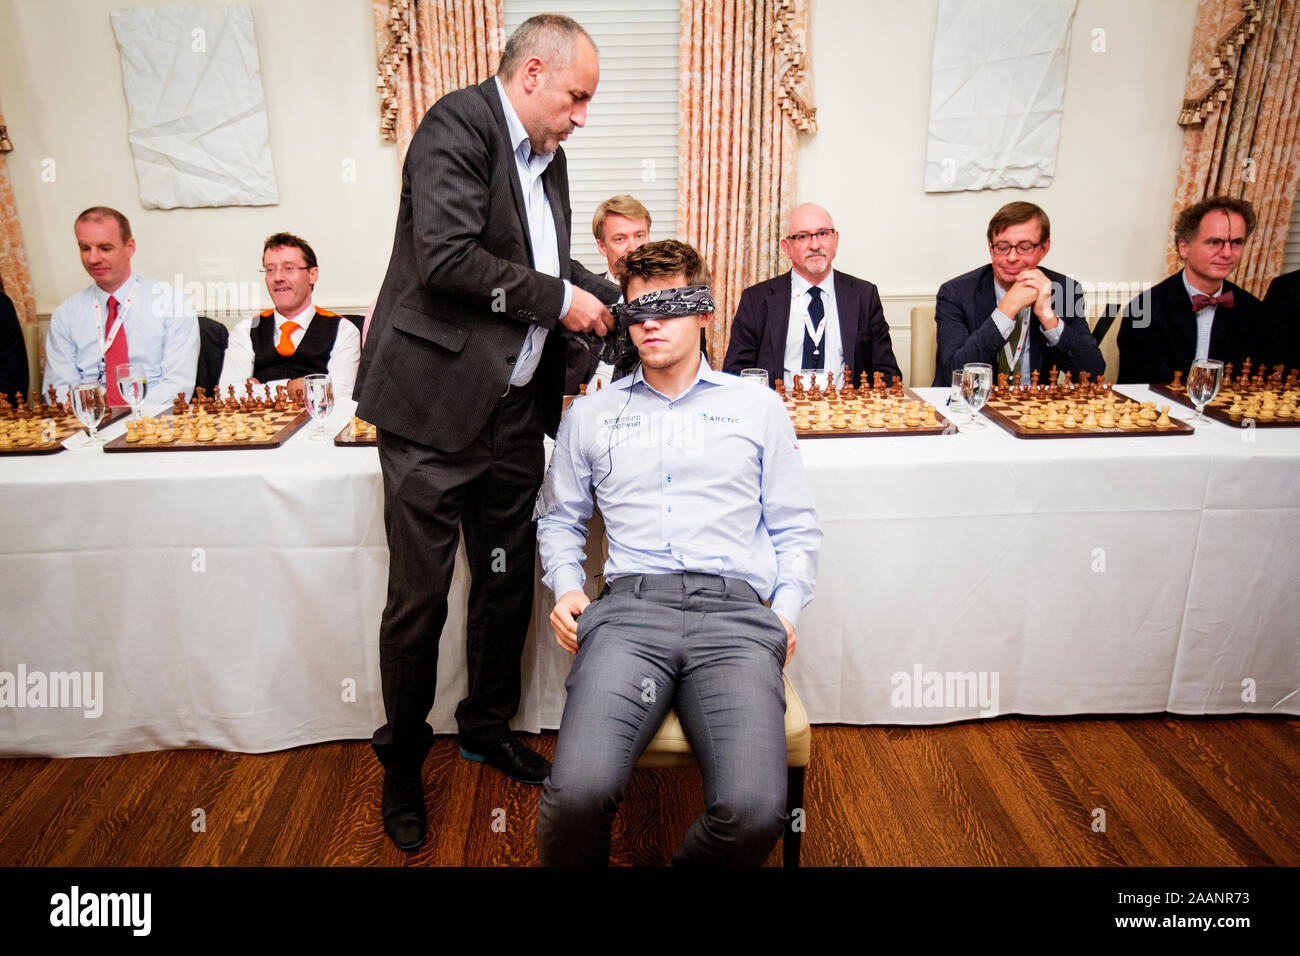 Norway's Magnus Carlsen Wins FIDE World Chess Championship 2021